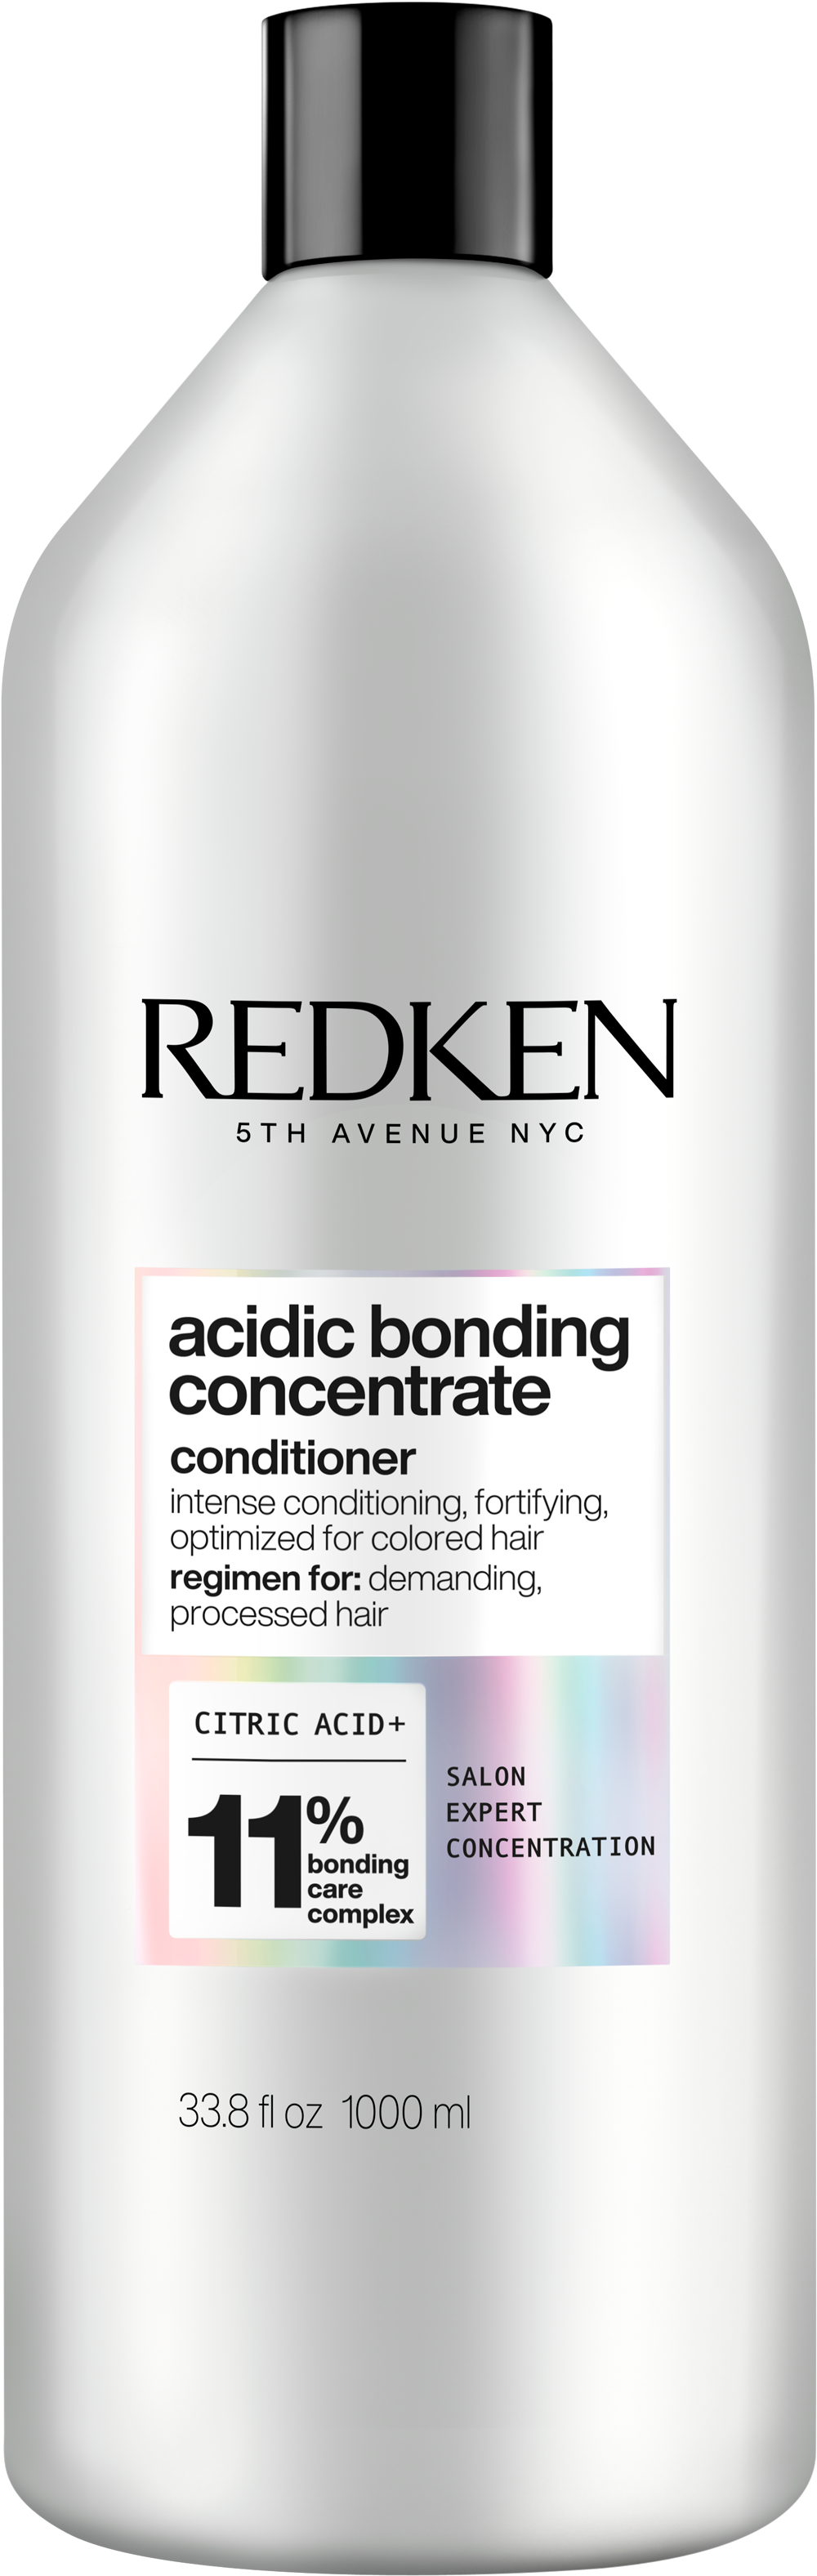 REDKEN Acidic Bonding Concentrate - Sulfate Free Conditioner Liter